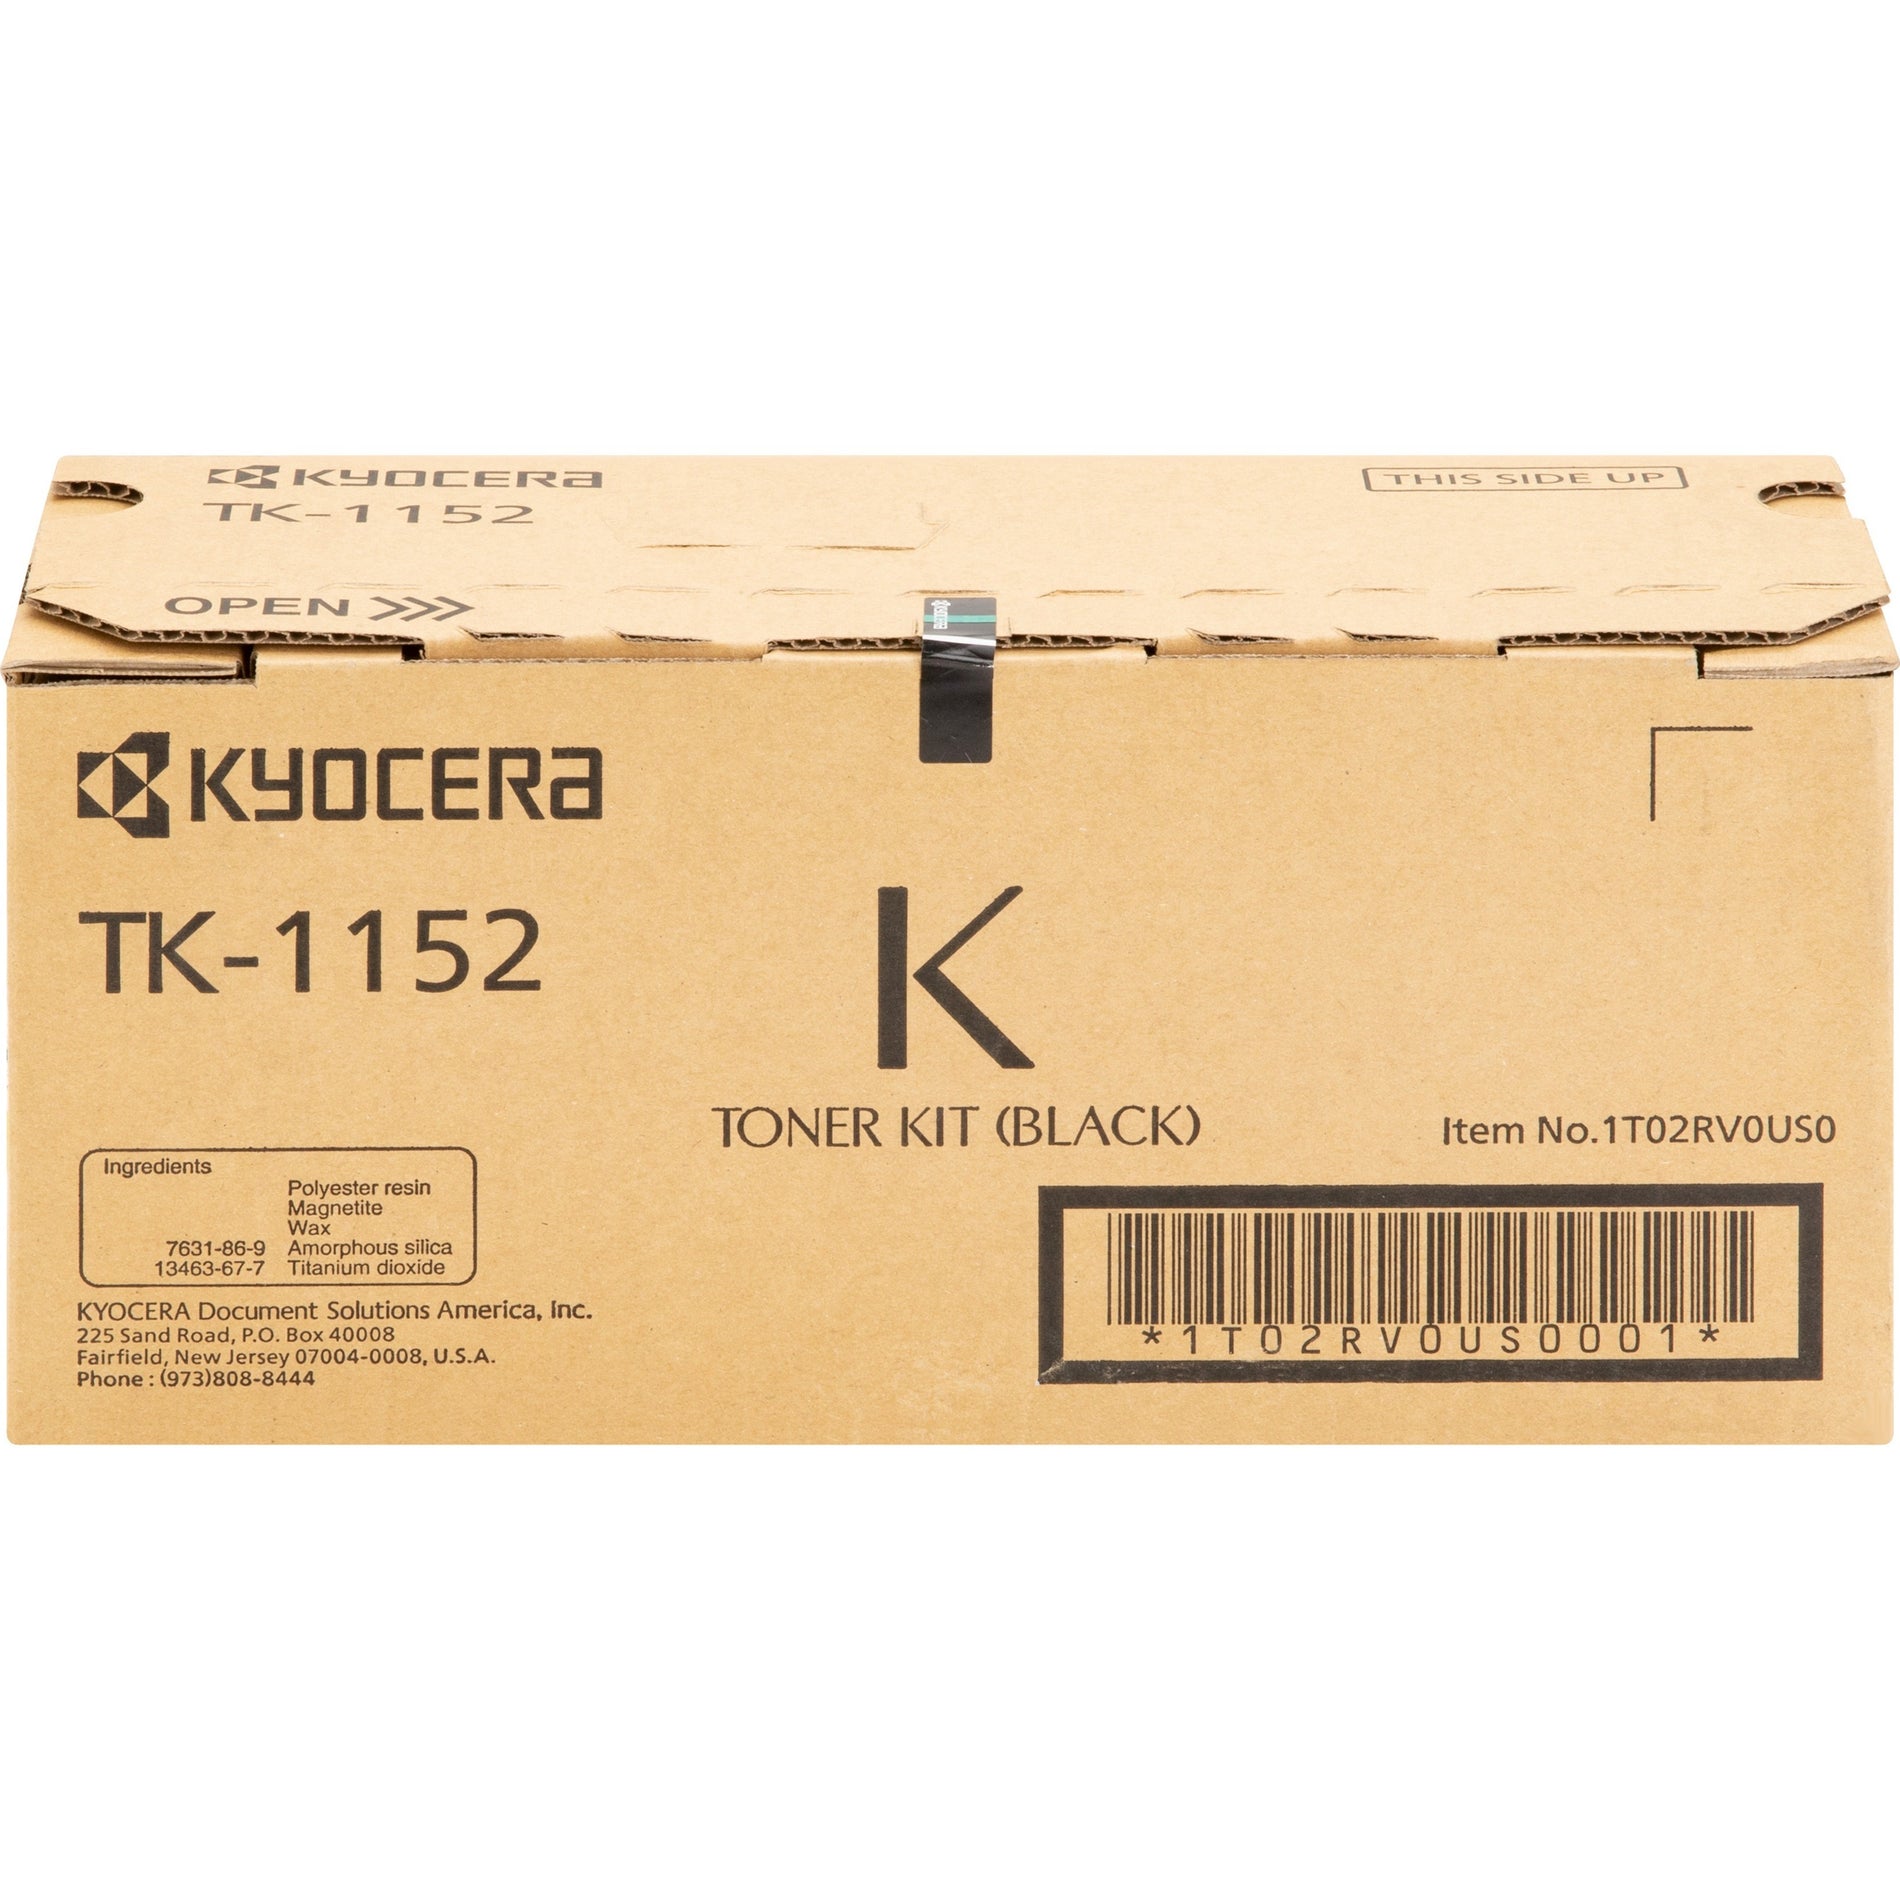 Kyocera TK-1152 Ecosys M2635dw Toner Cartridge, Black - Original Laser Toner Cartridge